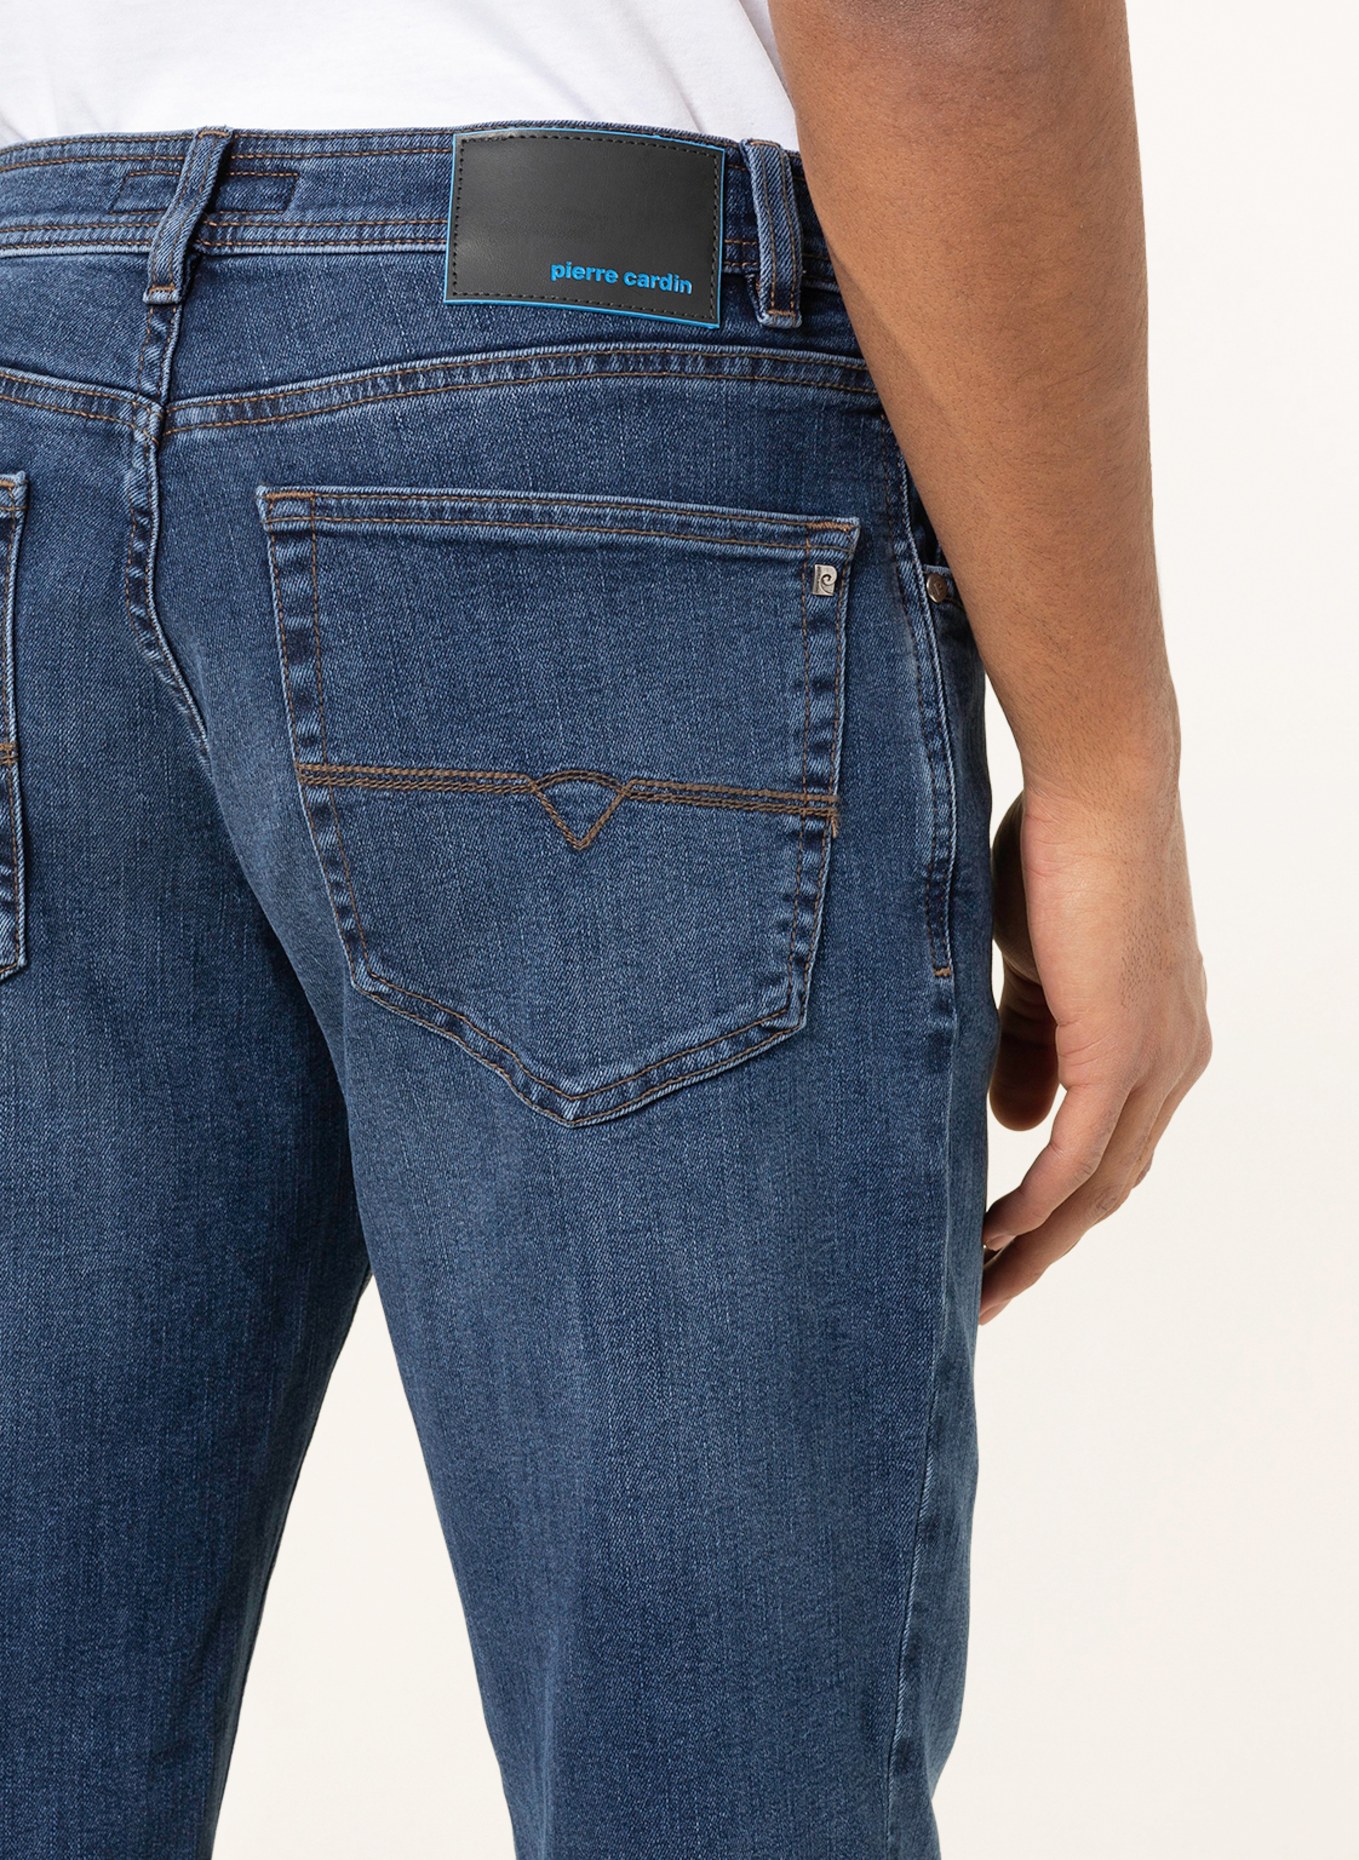 pierre cardin Jeans DIJON Comfort Fit , Color: 6812 dark blue used (Image 5)